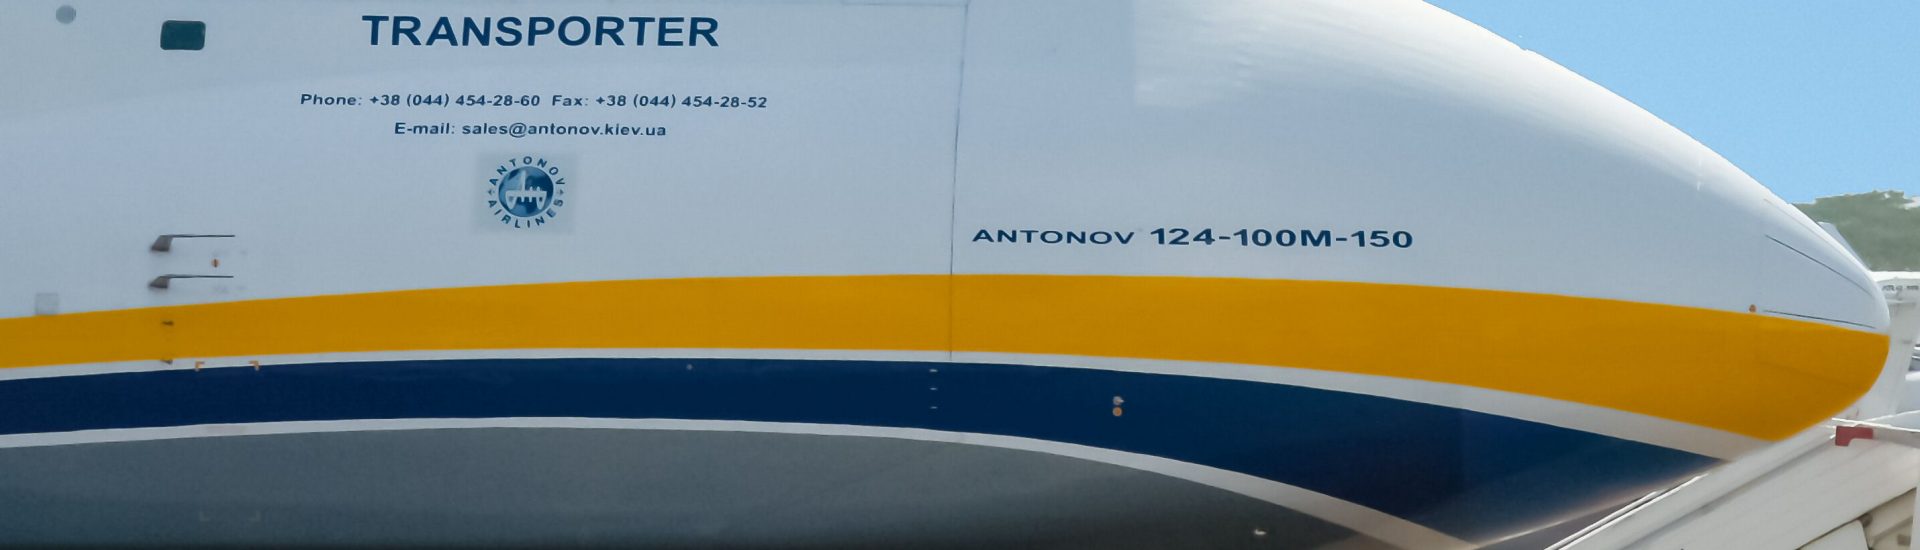 AN-124-100M-150 Antonov Airlines UR-82009